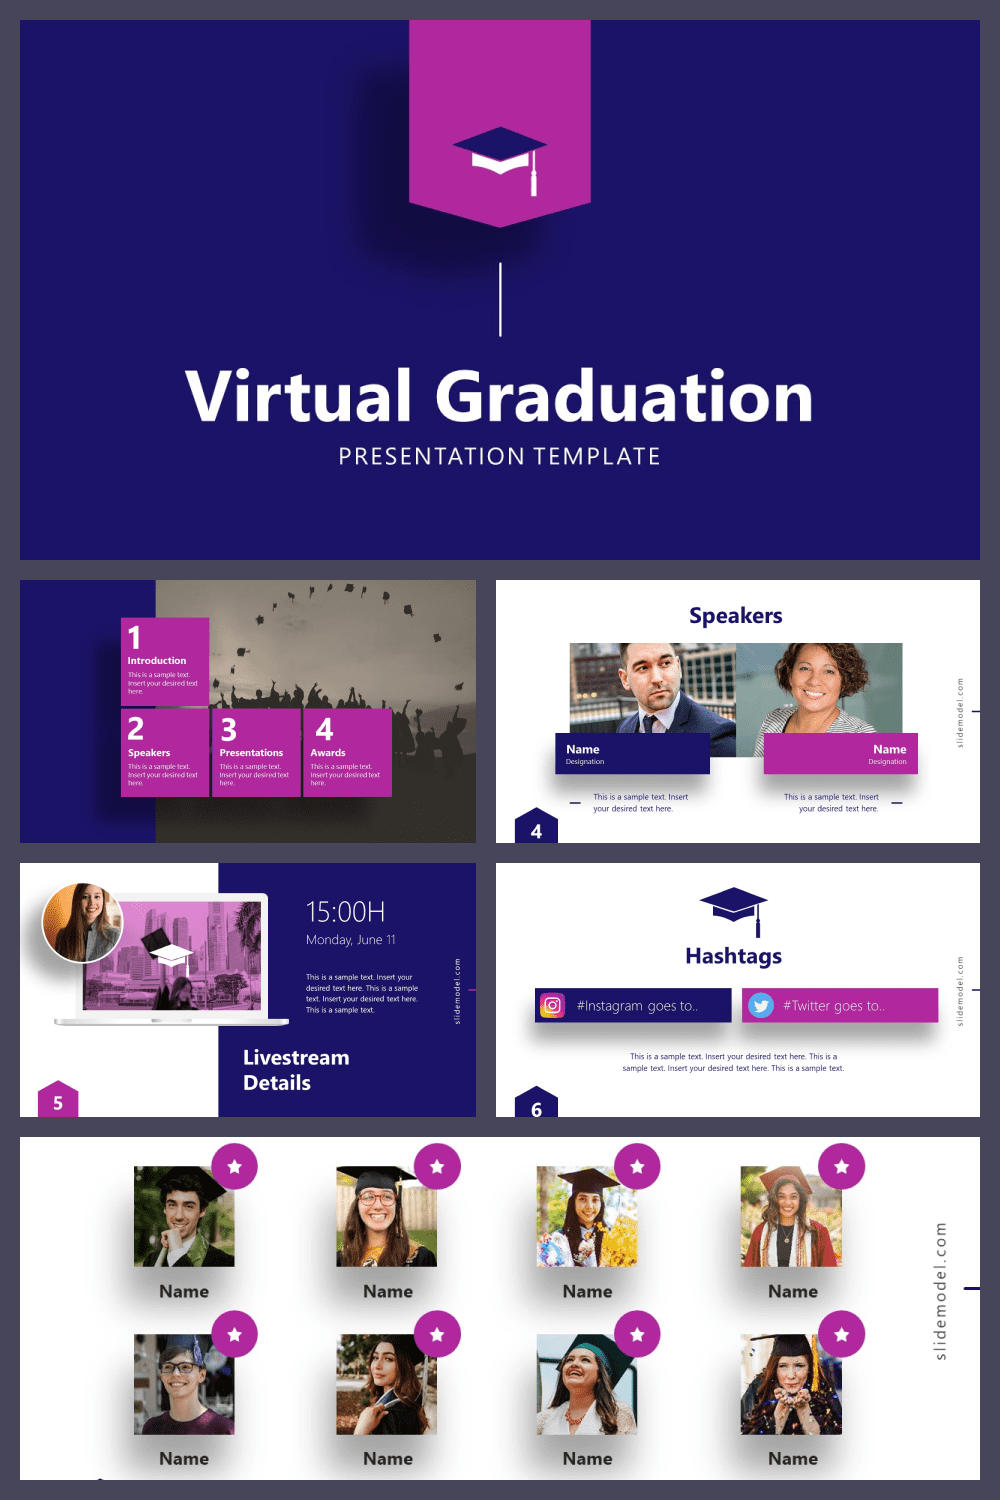 Virtual graduation powerpoint template.